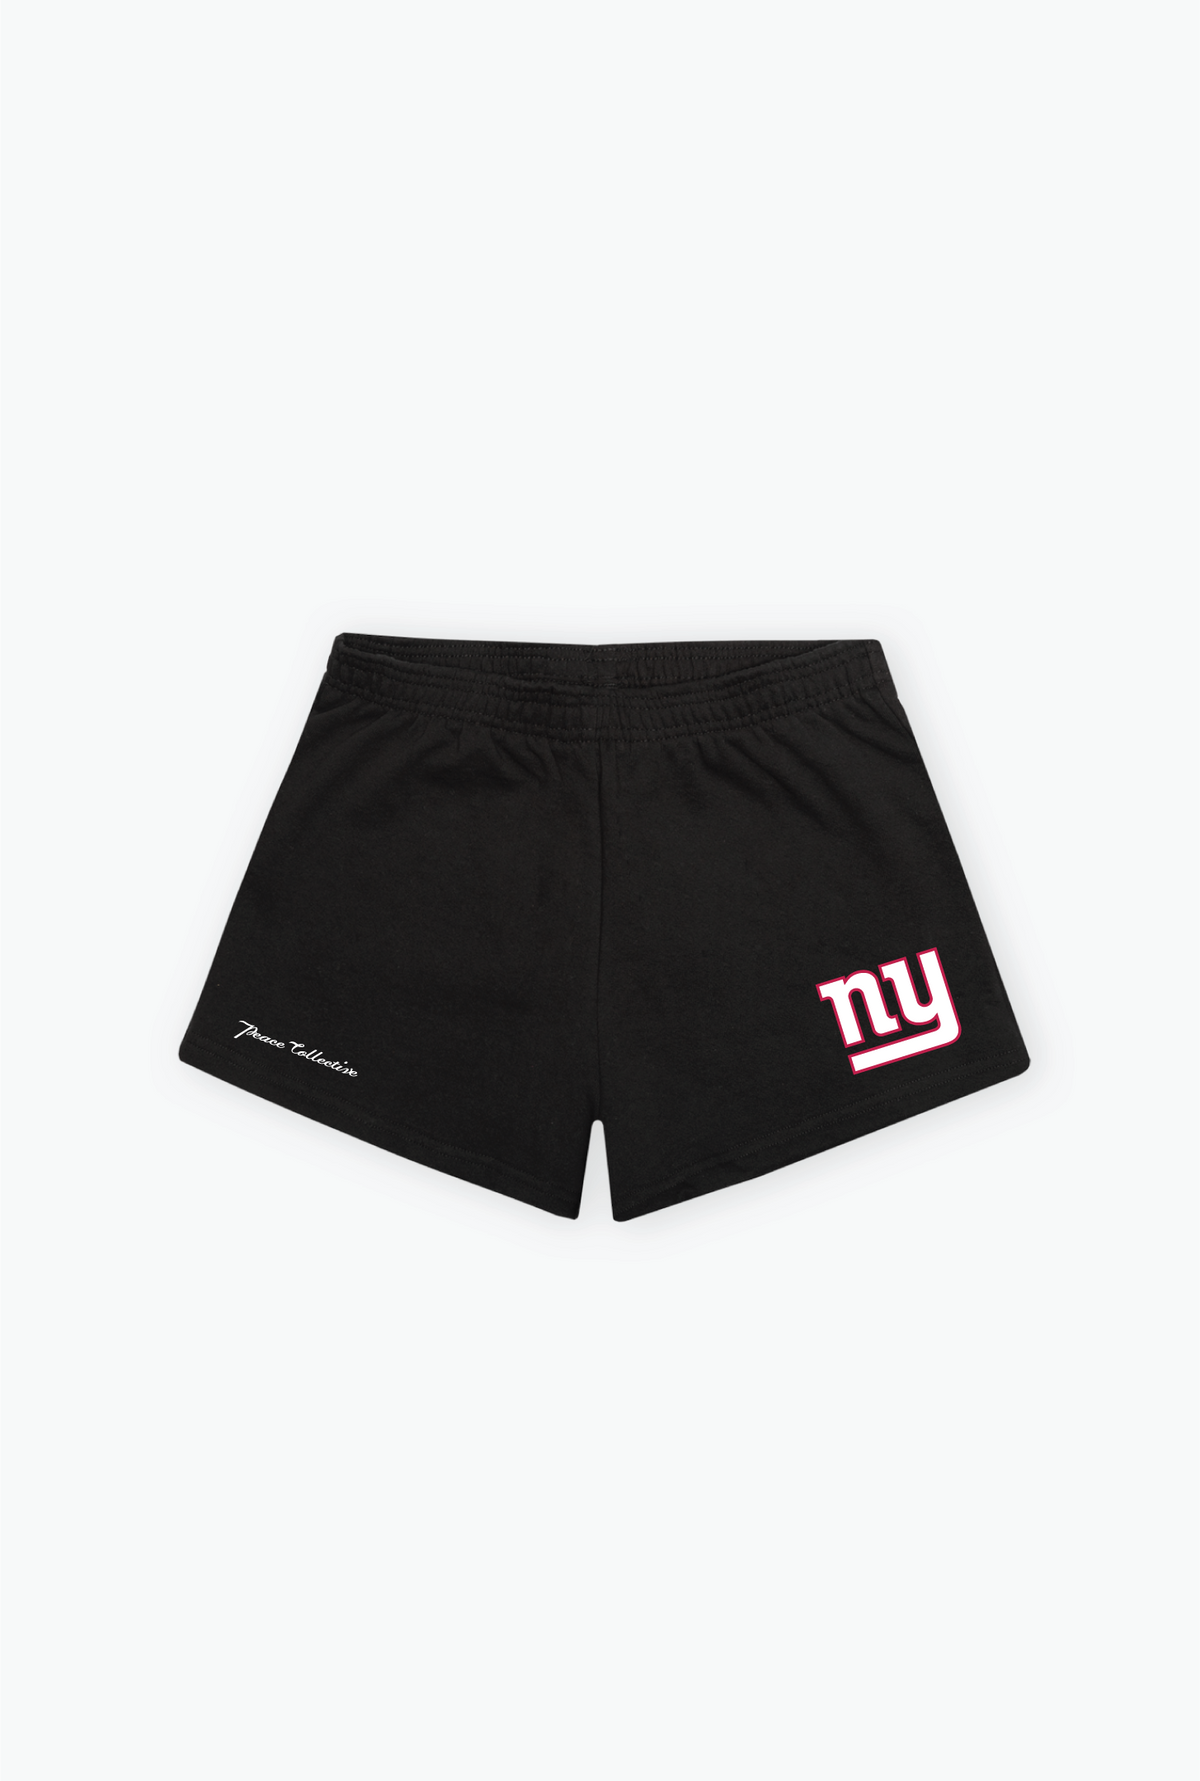 New York Giants Women's Fleece Shorts - Black